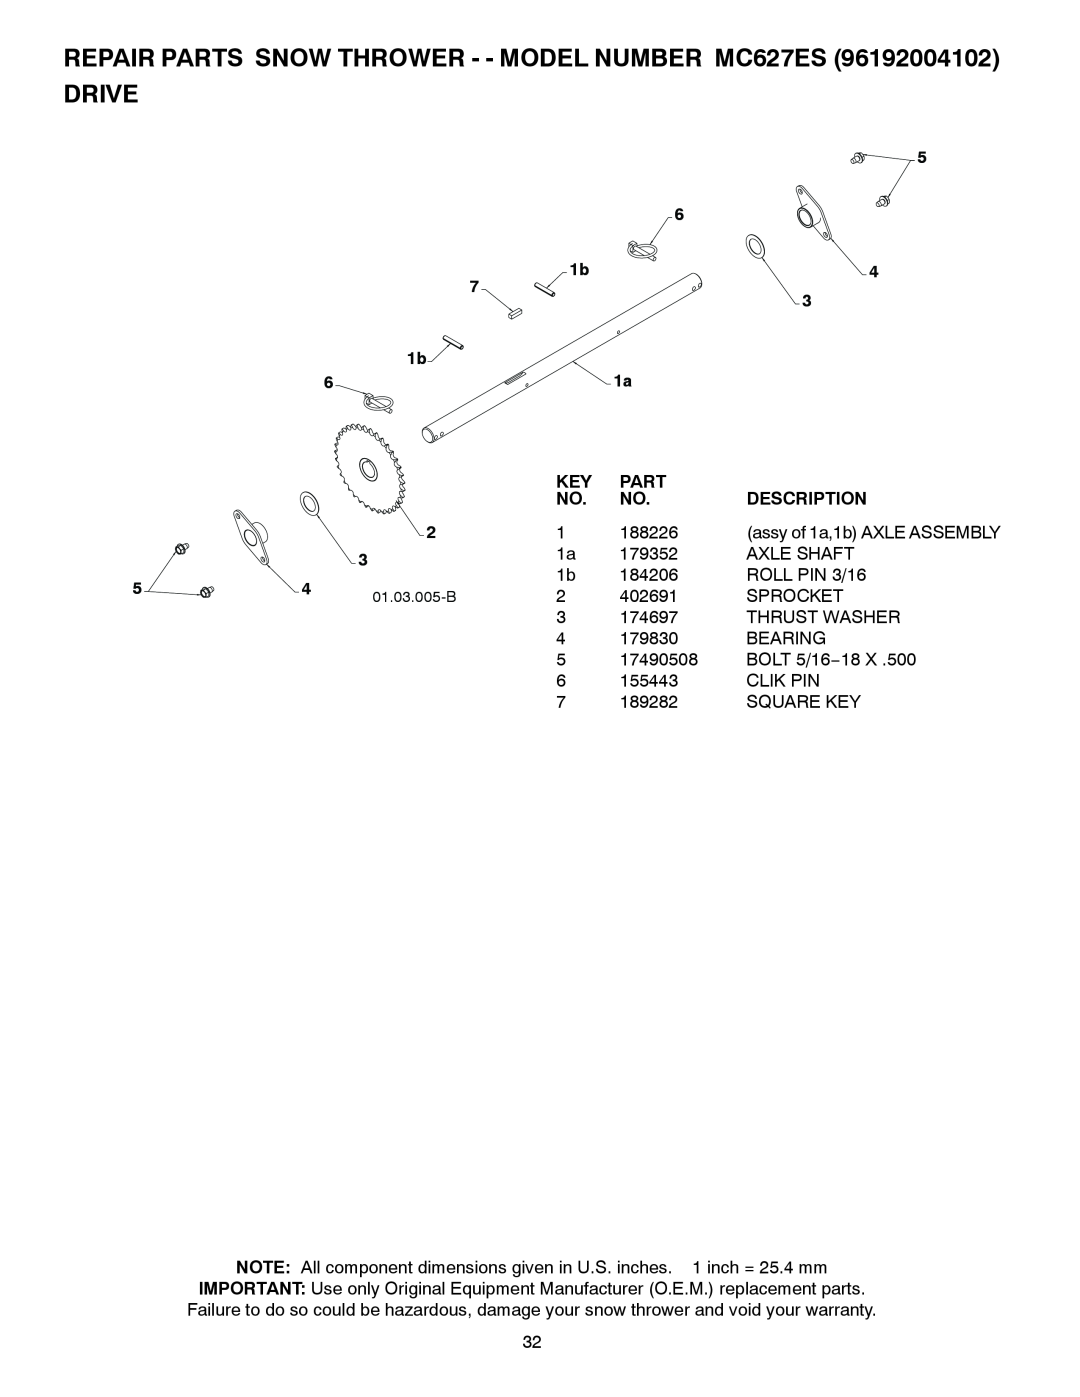 McCulloch 96192004102 owner manual REPAIR PARTS SNOW THROWER - - MODEL NUMBER MC627ES DRIVE, Part, Description, 01.03.005-B 